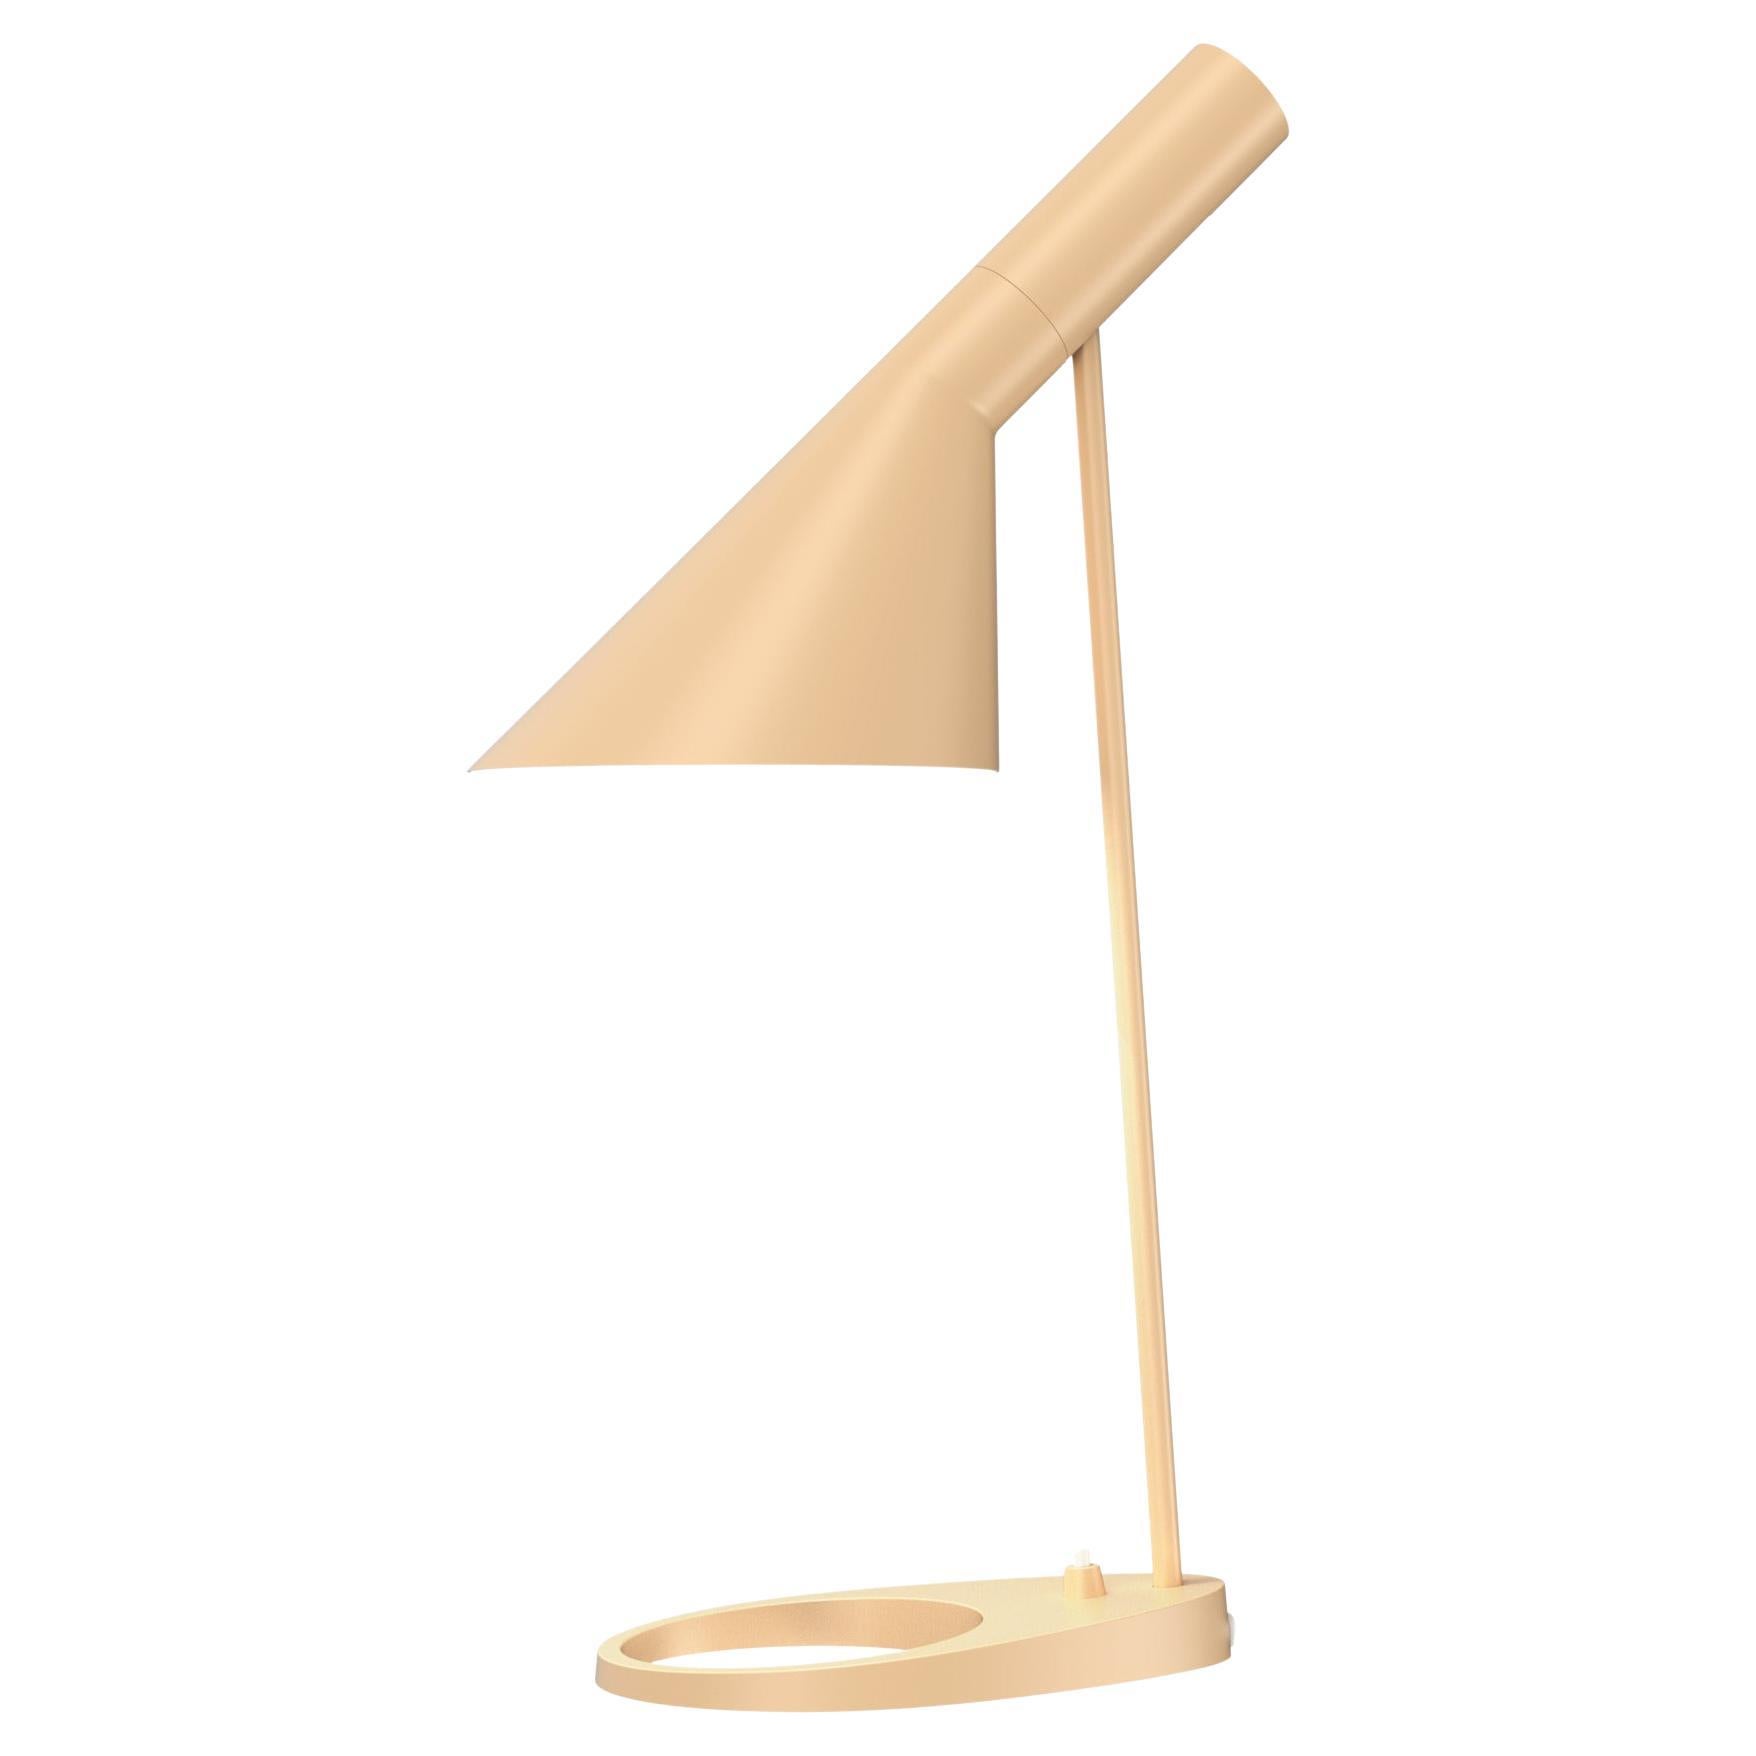 Arne Jacobsen AJ Table Lamp in Warm Sand for Louis Poulsen For Sale